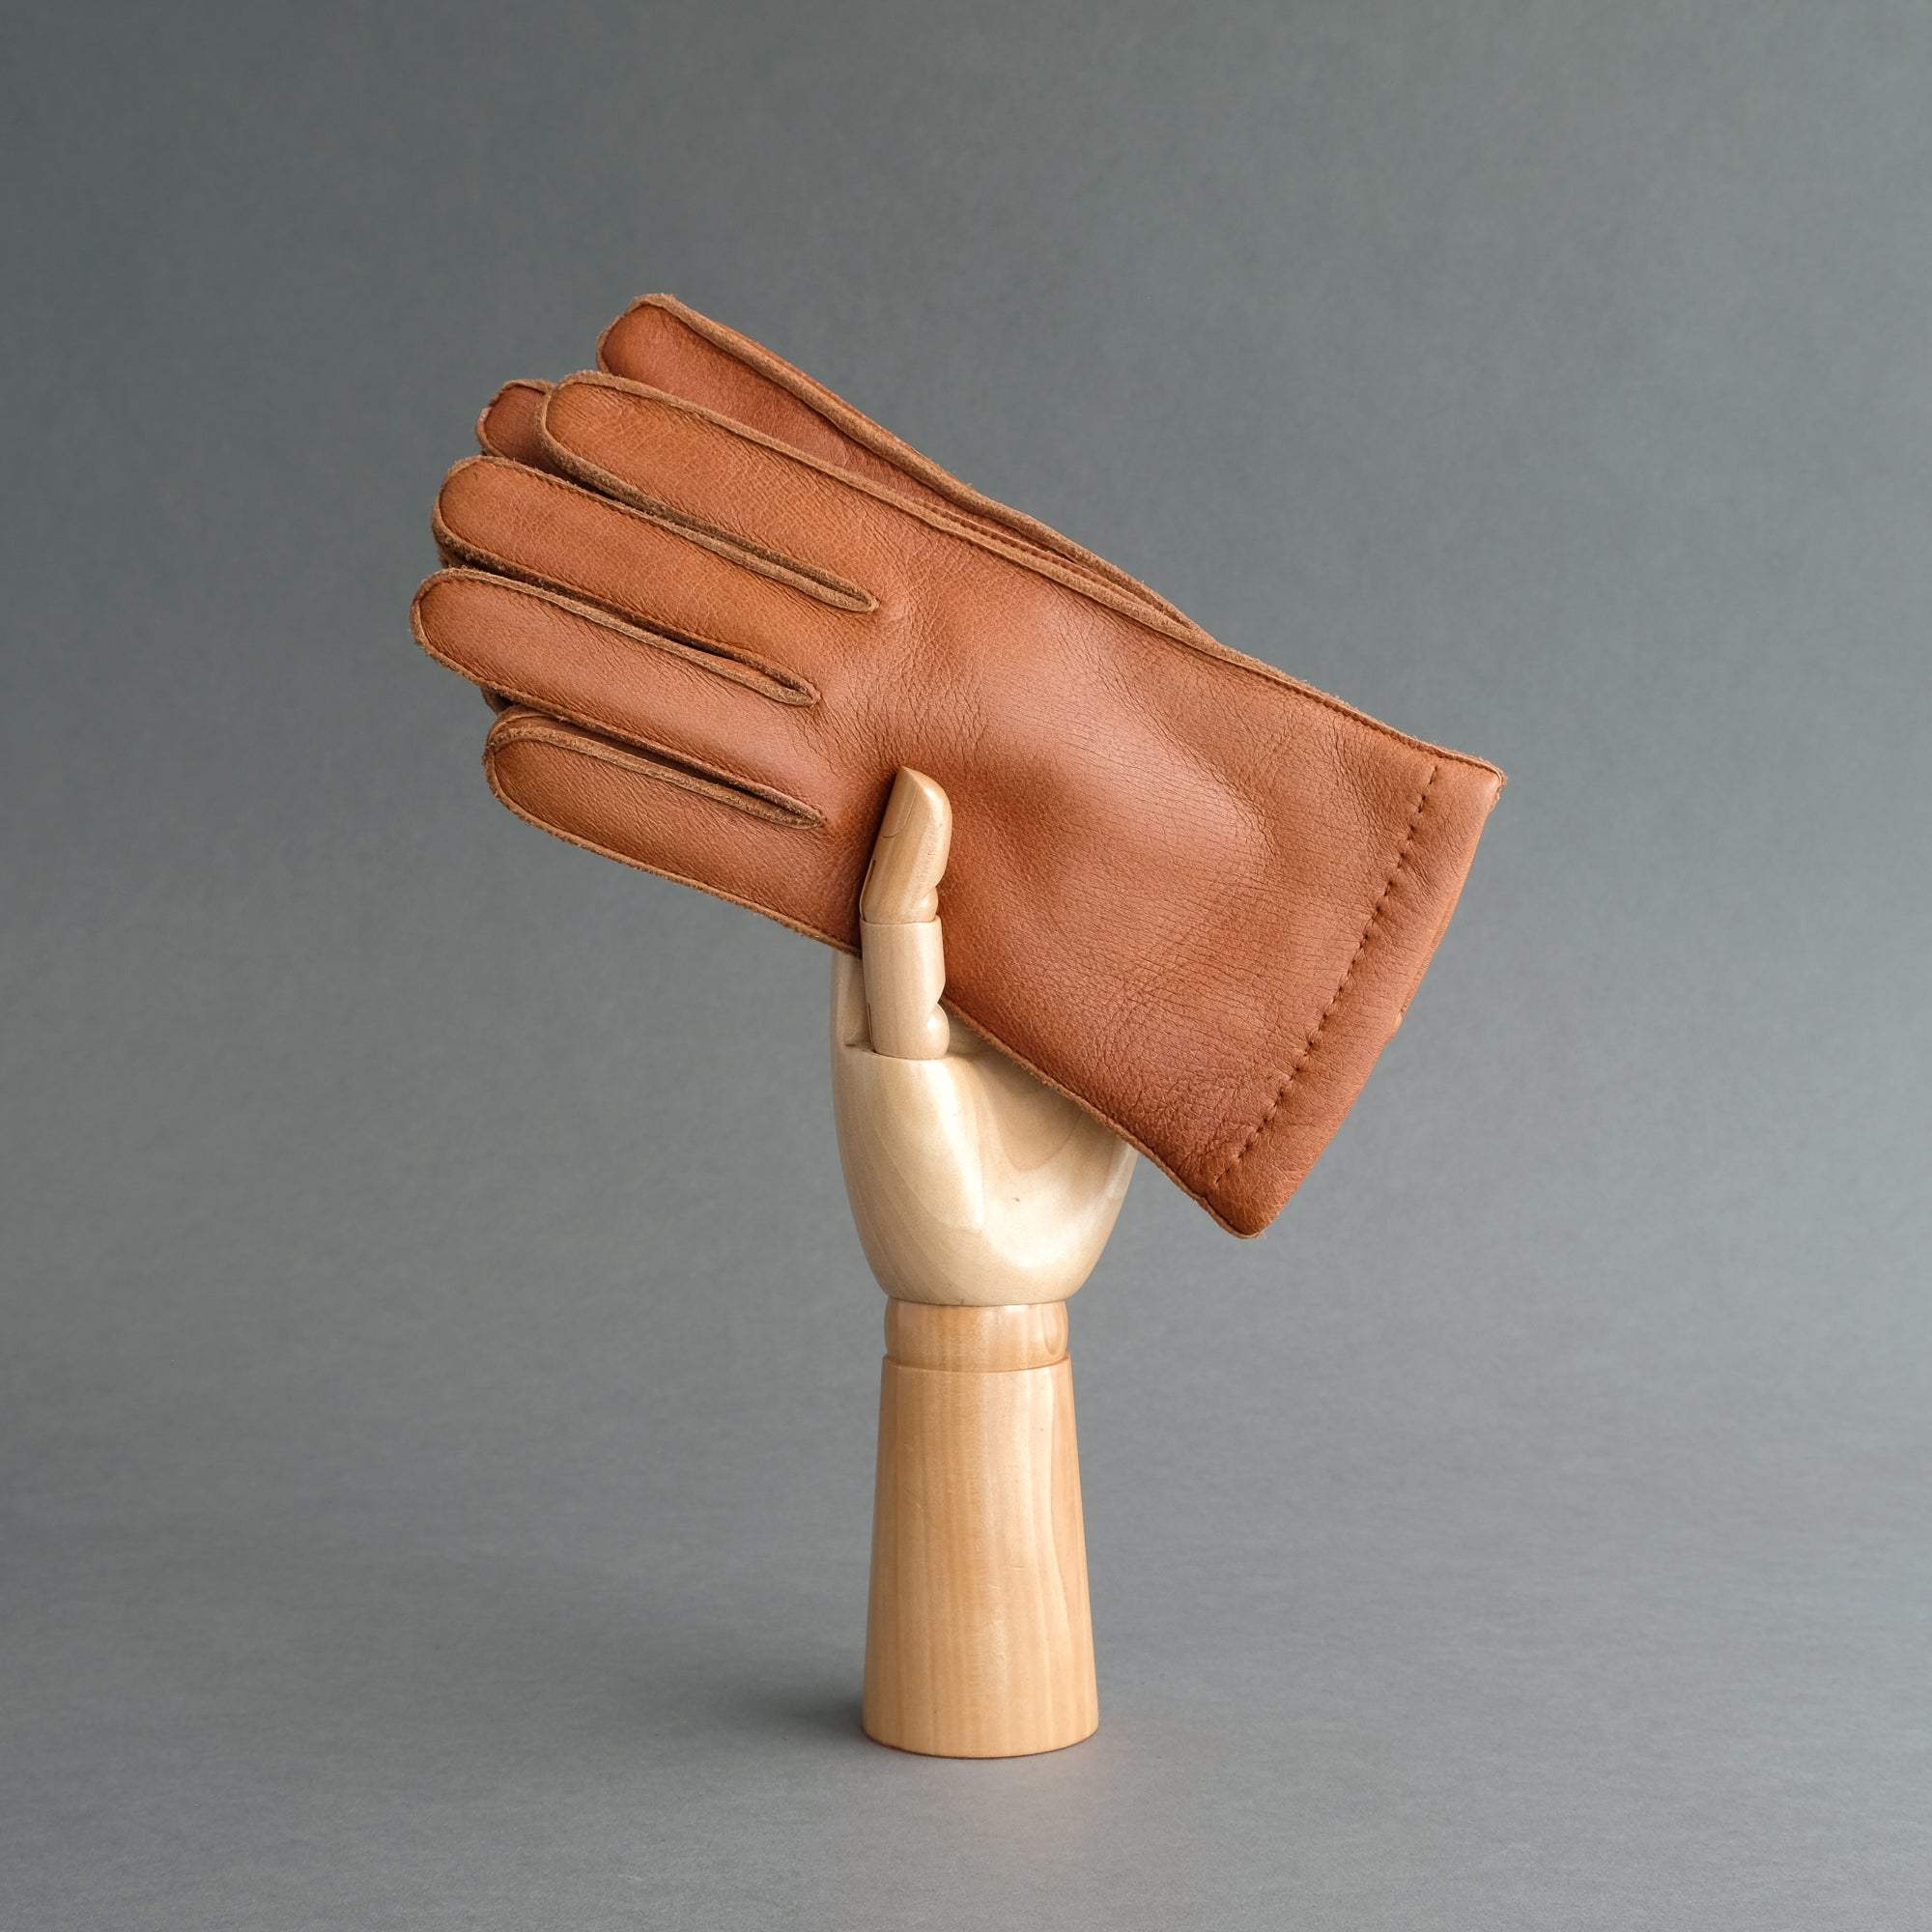 Gentlemen's Sporty Gloves from Cognac Deerskin Lined with Cashmere - TR Handschuhe Wien - Thomas Riemer Handmade Gloves